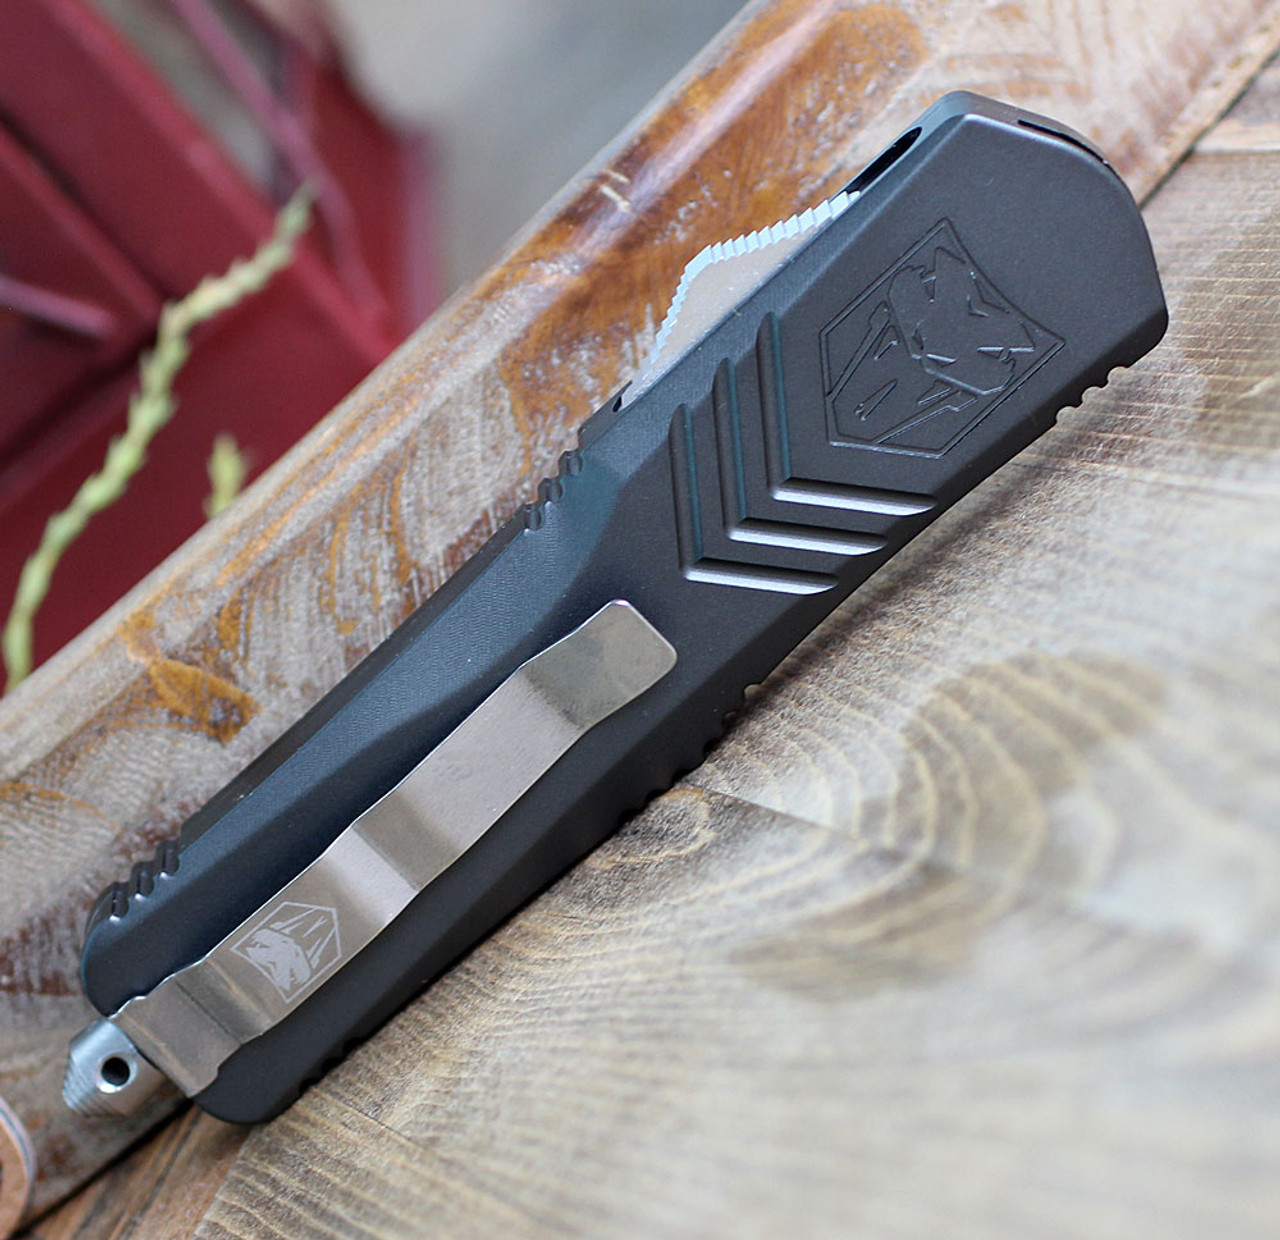 CobraTec Gray FS-X OTF Knife CTKLGRYFS-XLDAG2SS, 3.75" D2 Steel Dagger Double Serrated Blade, Gray Aluminum Handle